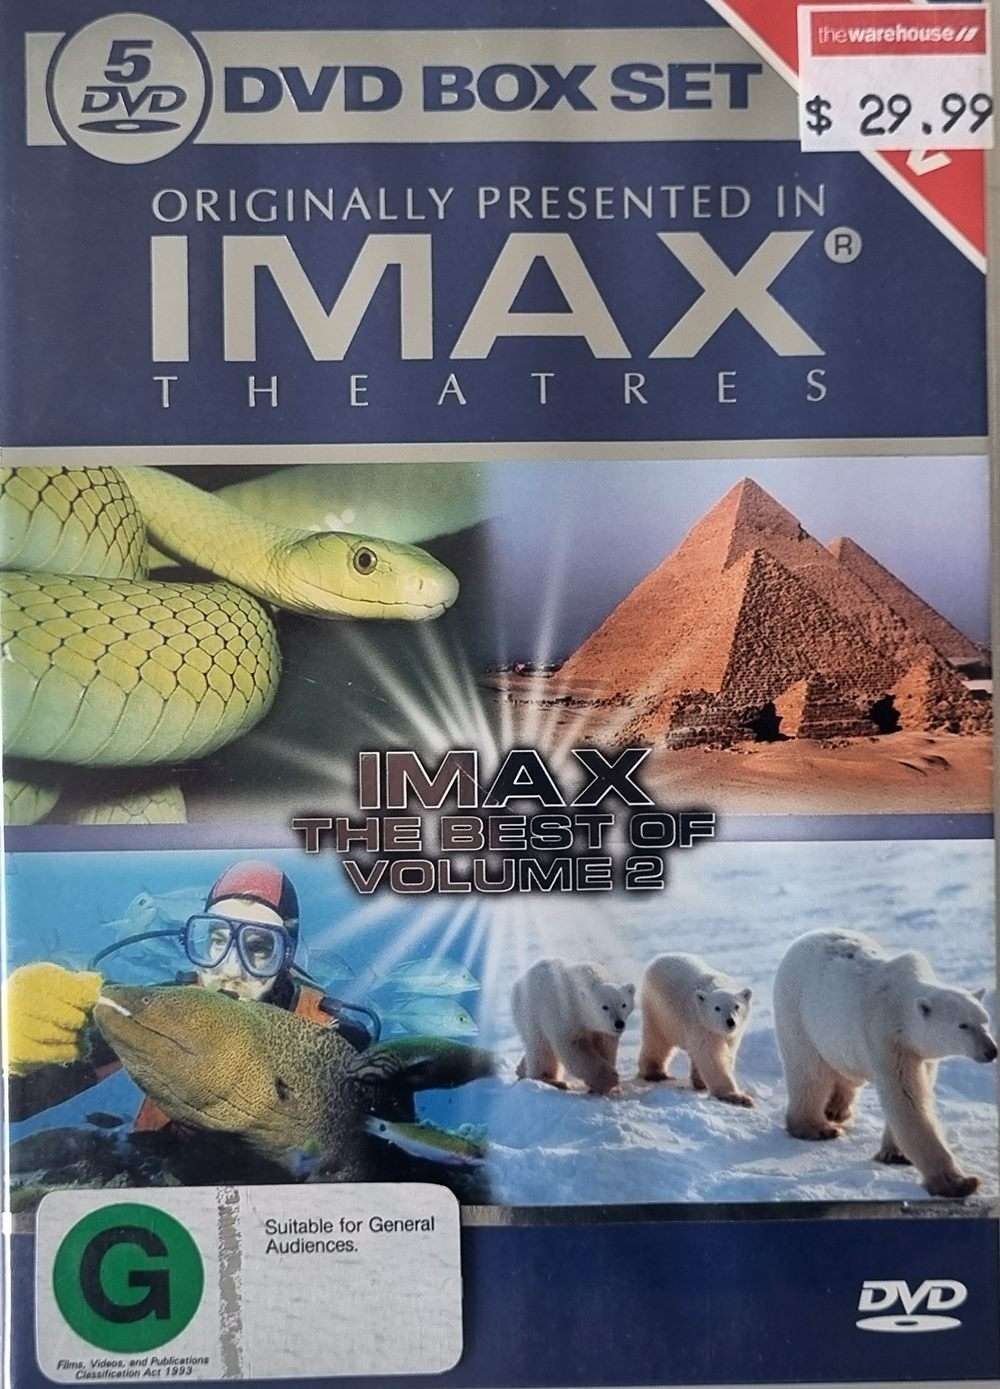 Originally presented in IMAX Theatres Vol. 2 5 Disc Set